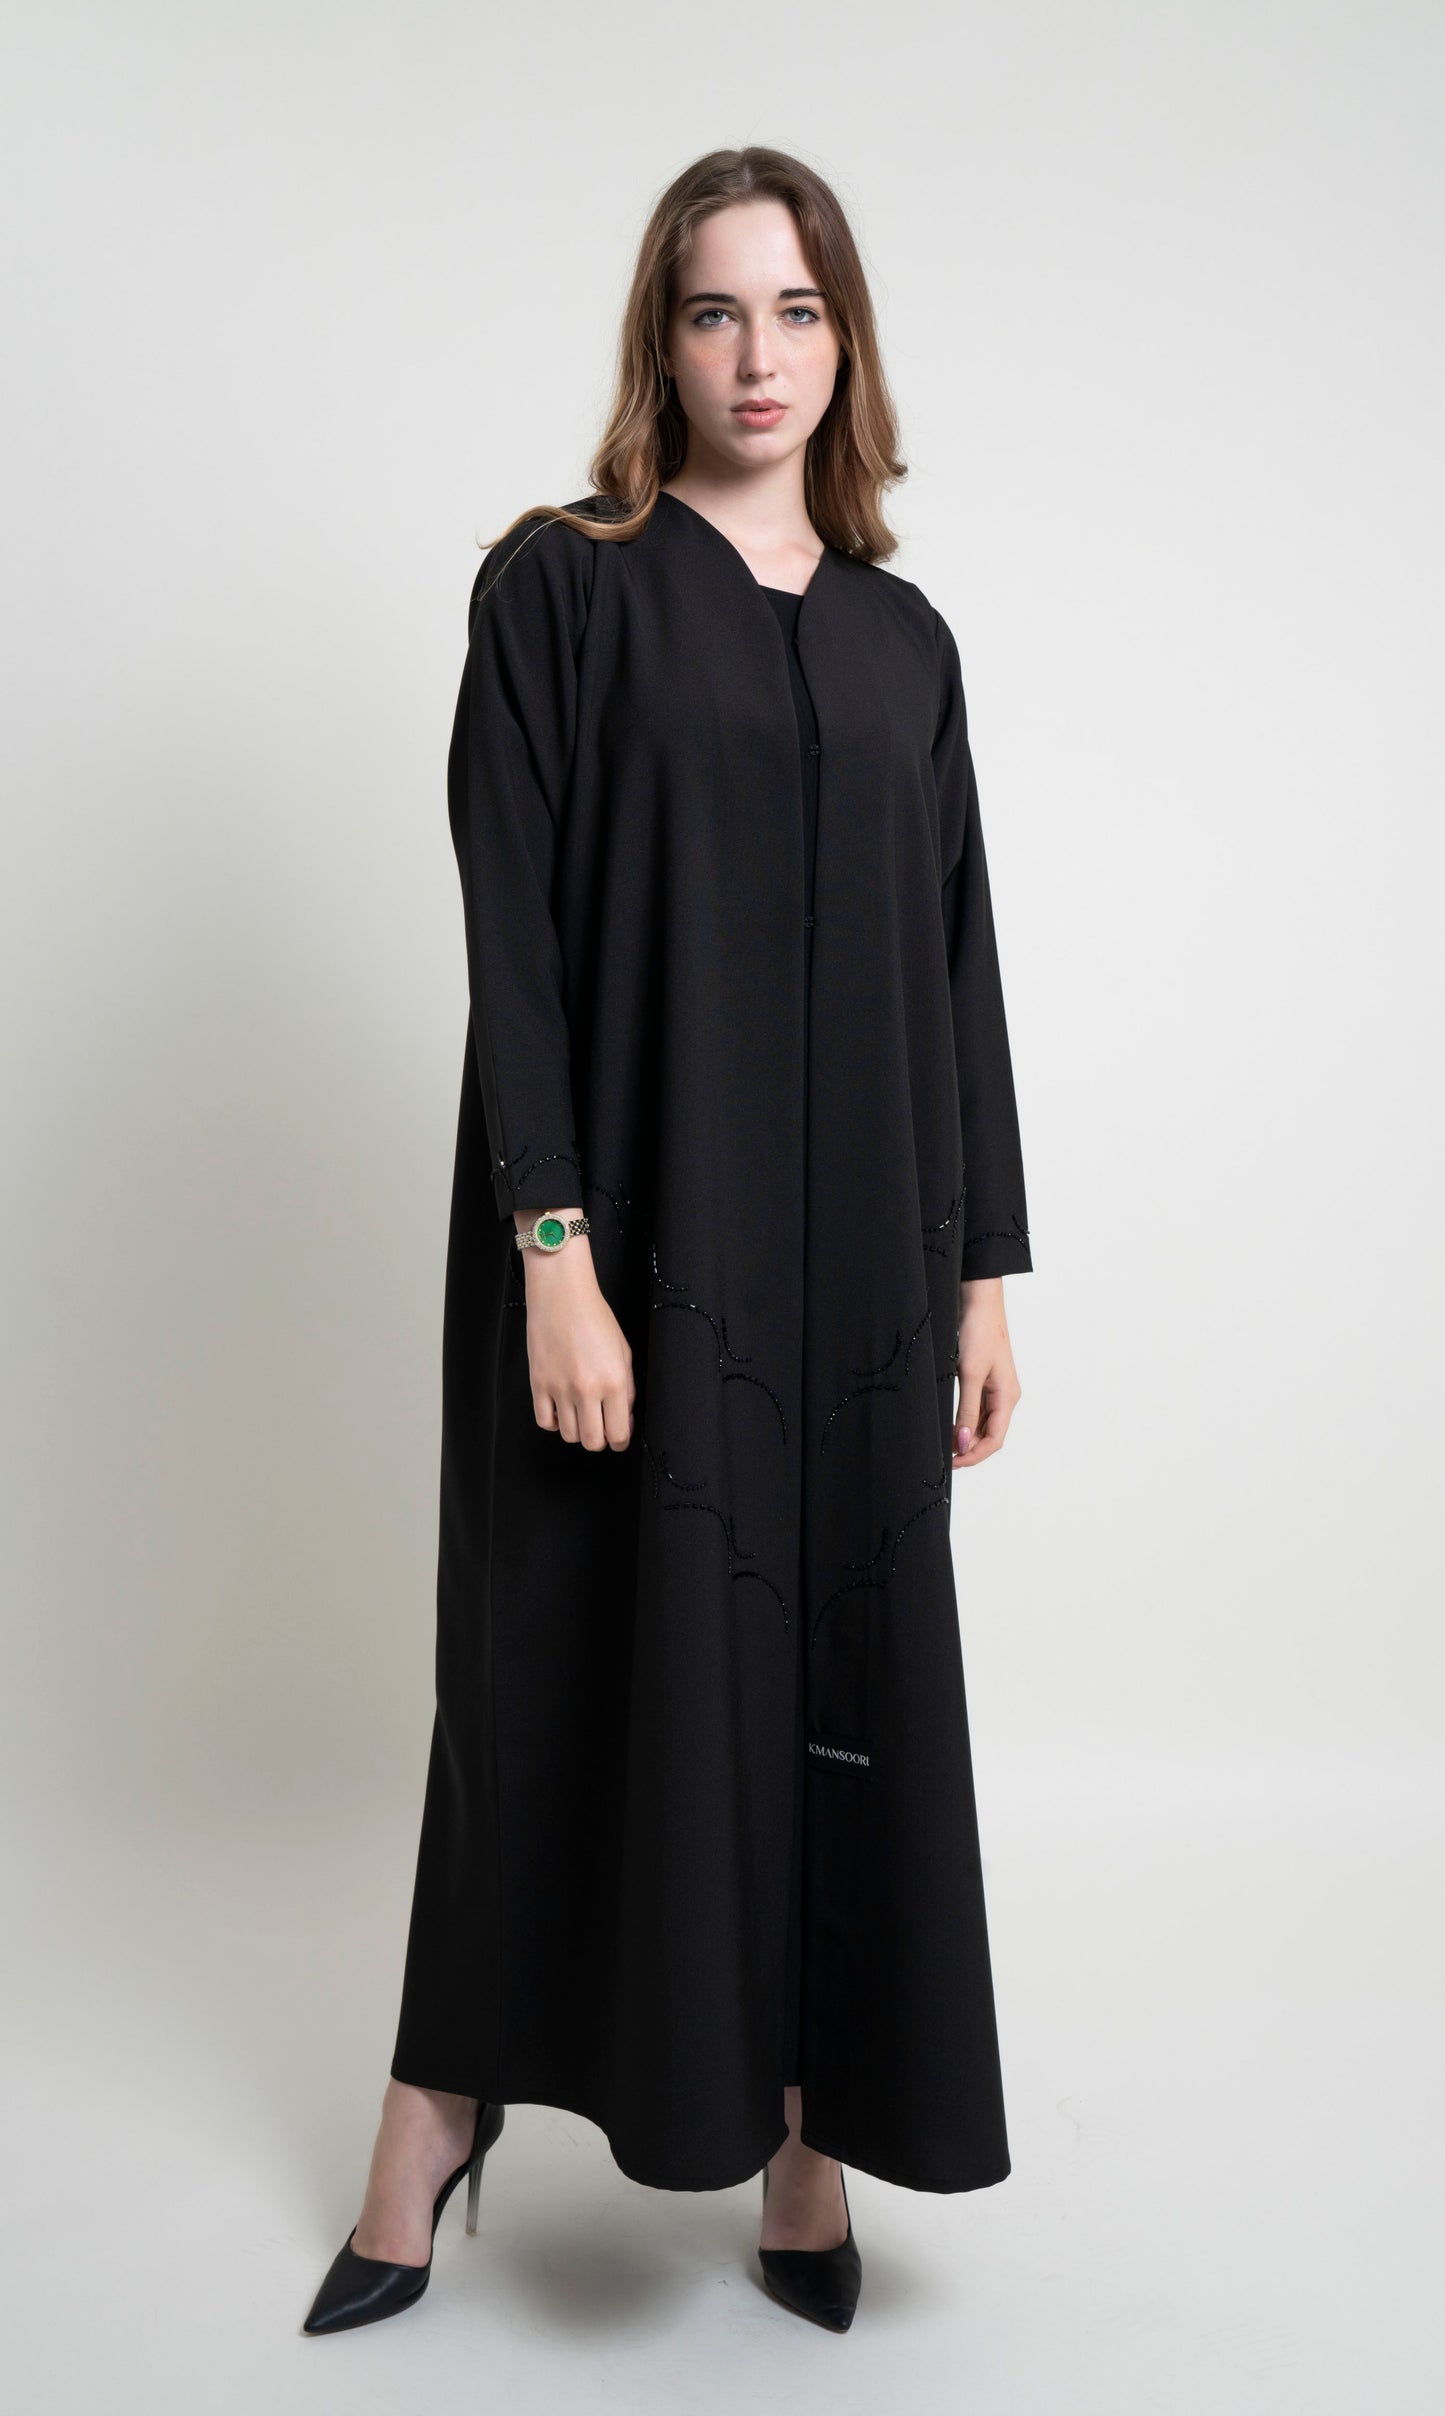 Curve designed abaya for women